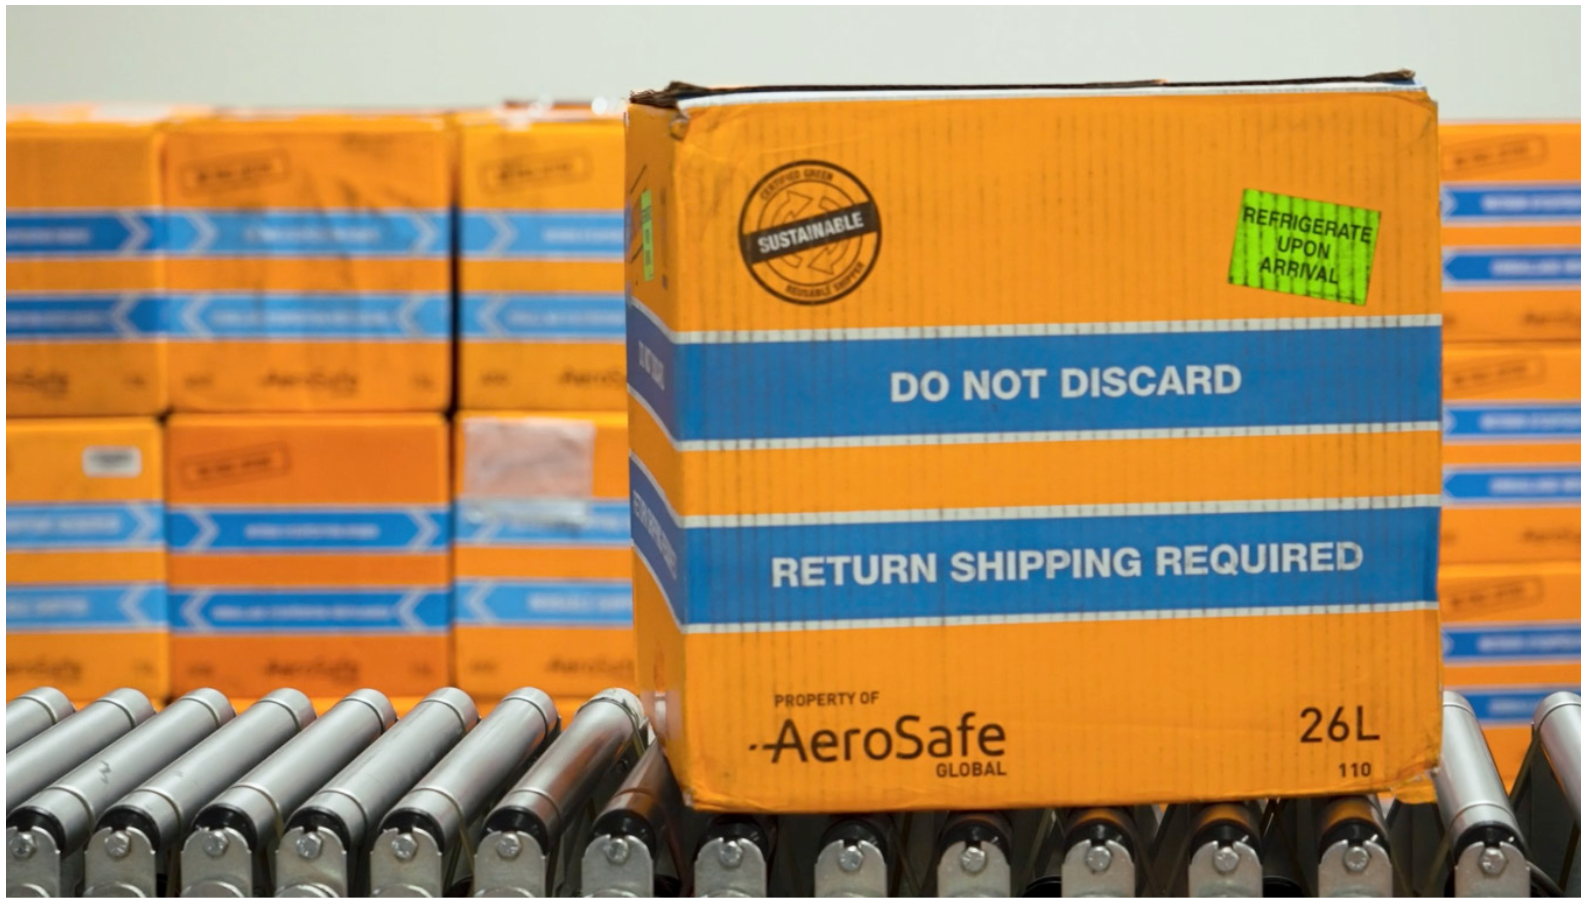 AeroSafe’s Global Reuse Program

Source: AeroSafe Global